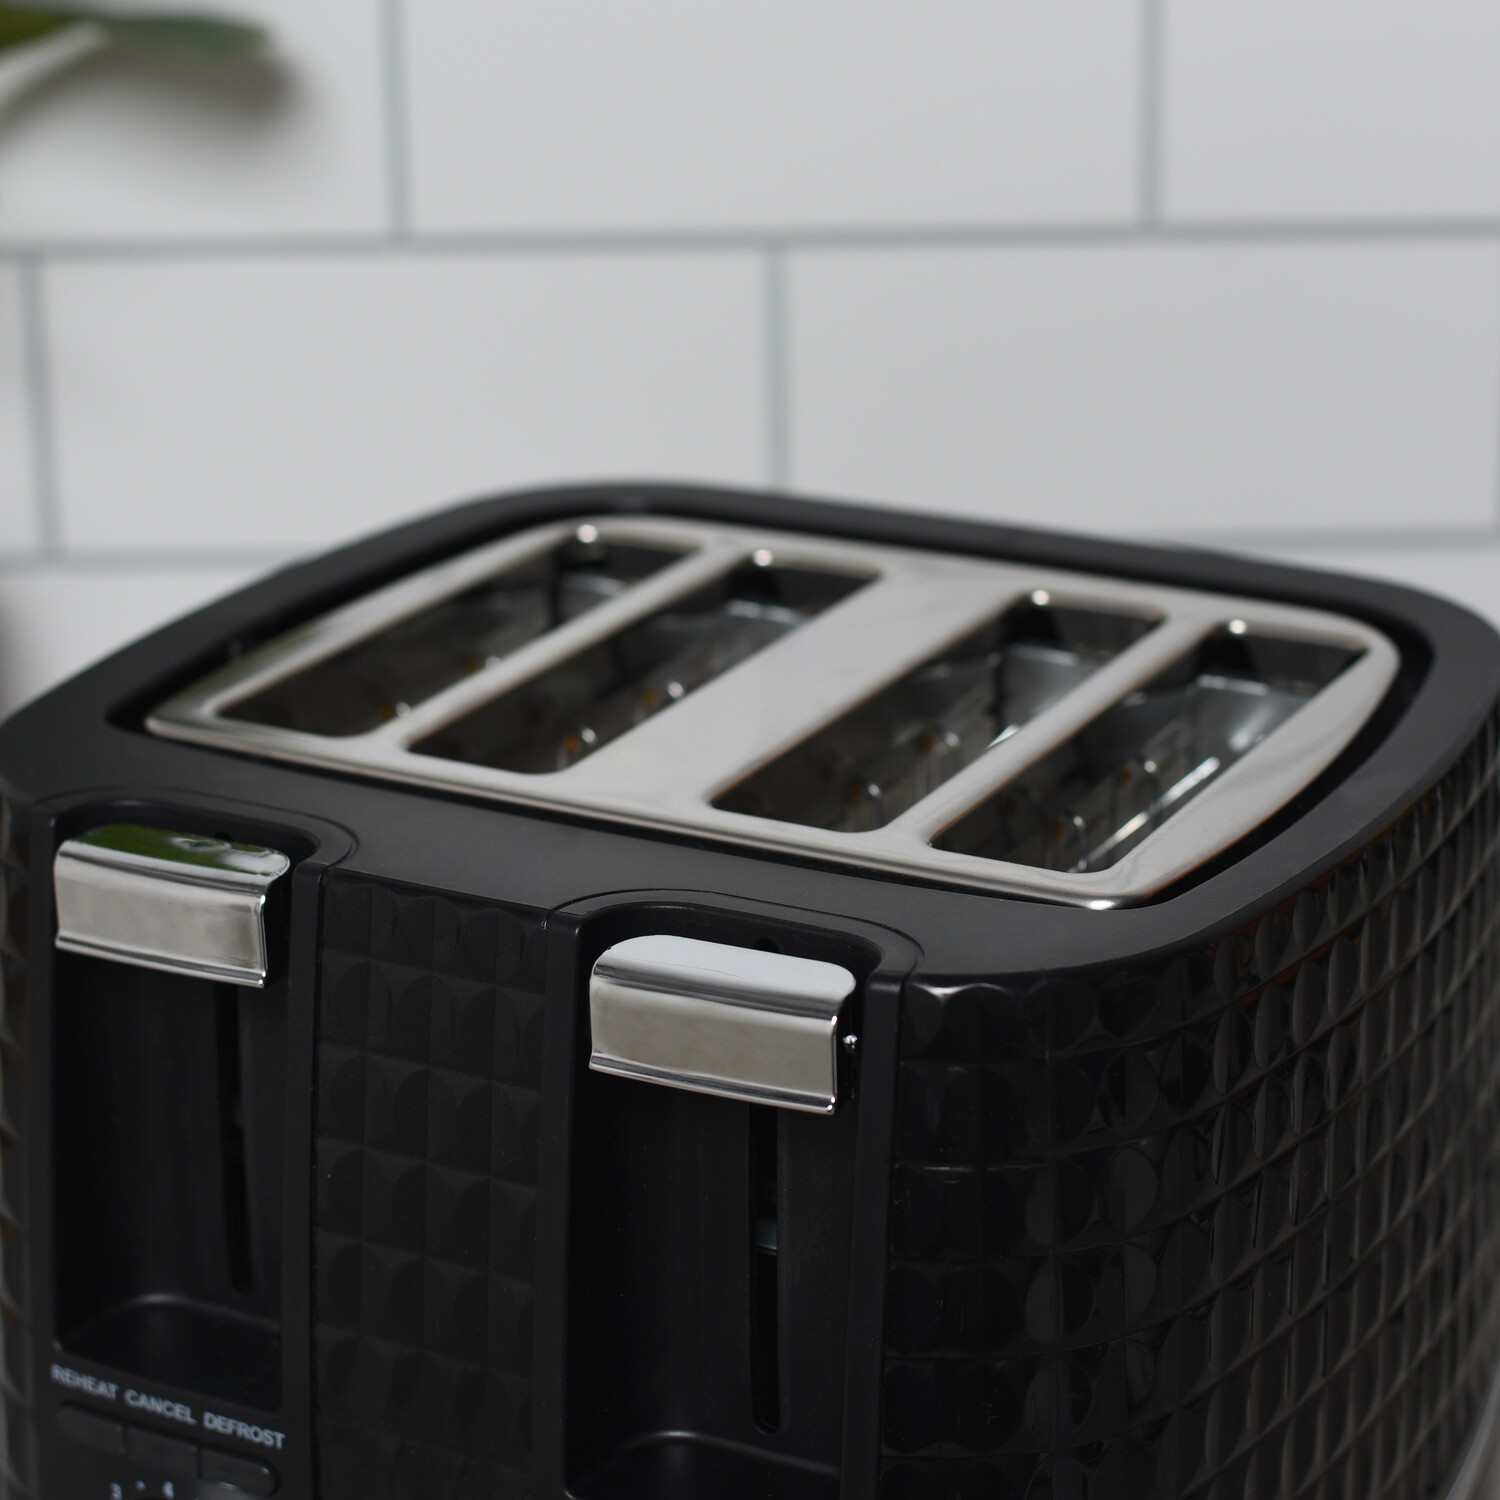 Forte Black 4 Slot Plastic Toaster Image 3